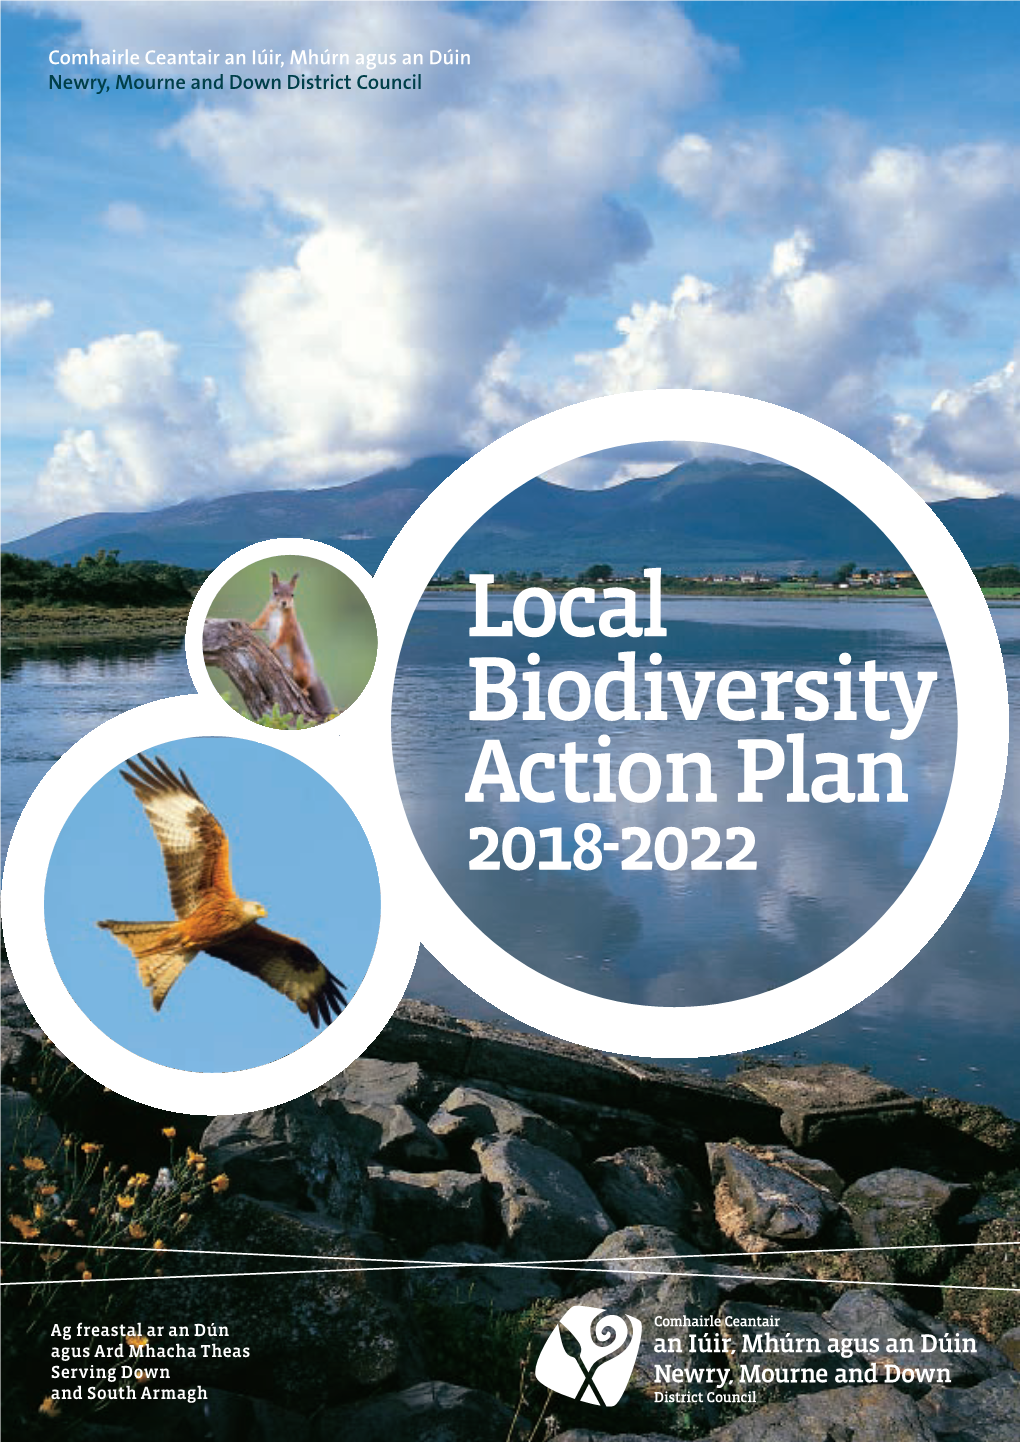 Local Biodiversity Action Plan 2018-2022 Cover Images: Main Image – Dundrum Bay @ Tourism NI Red Squirrel @ DAERA Red Kite @ Ben Hall